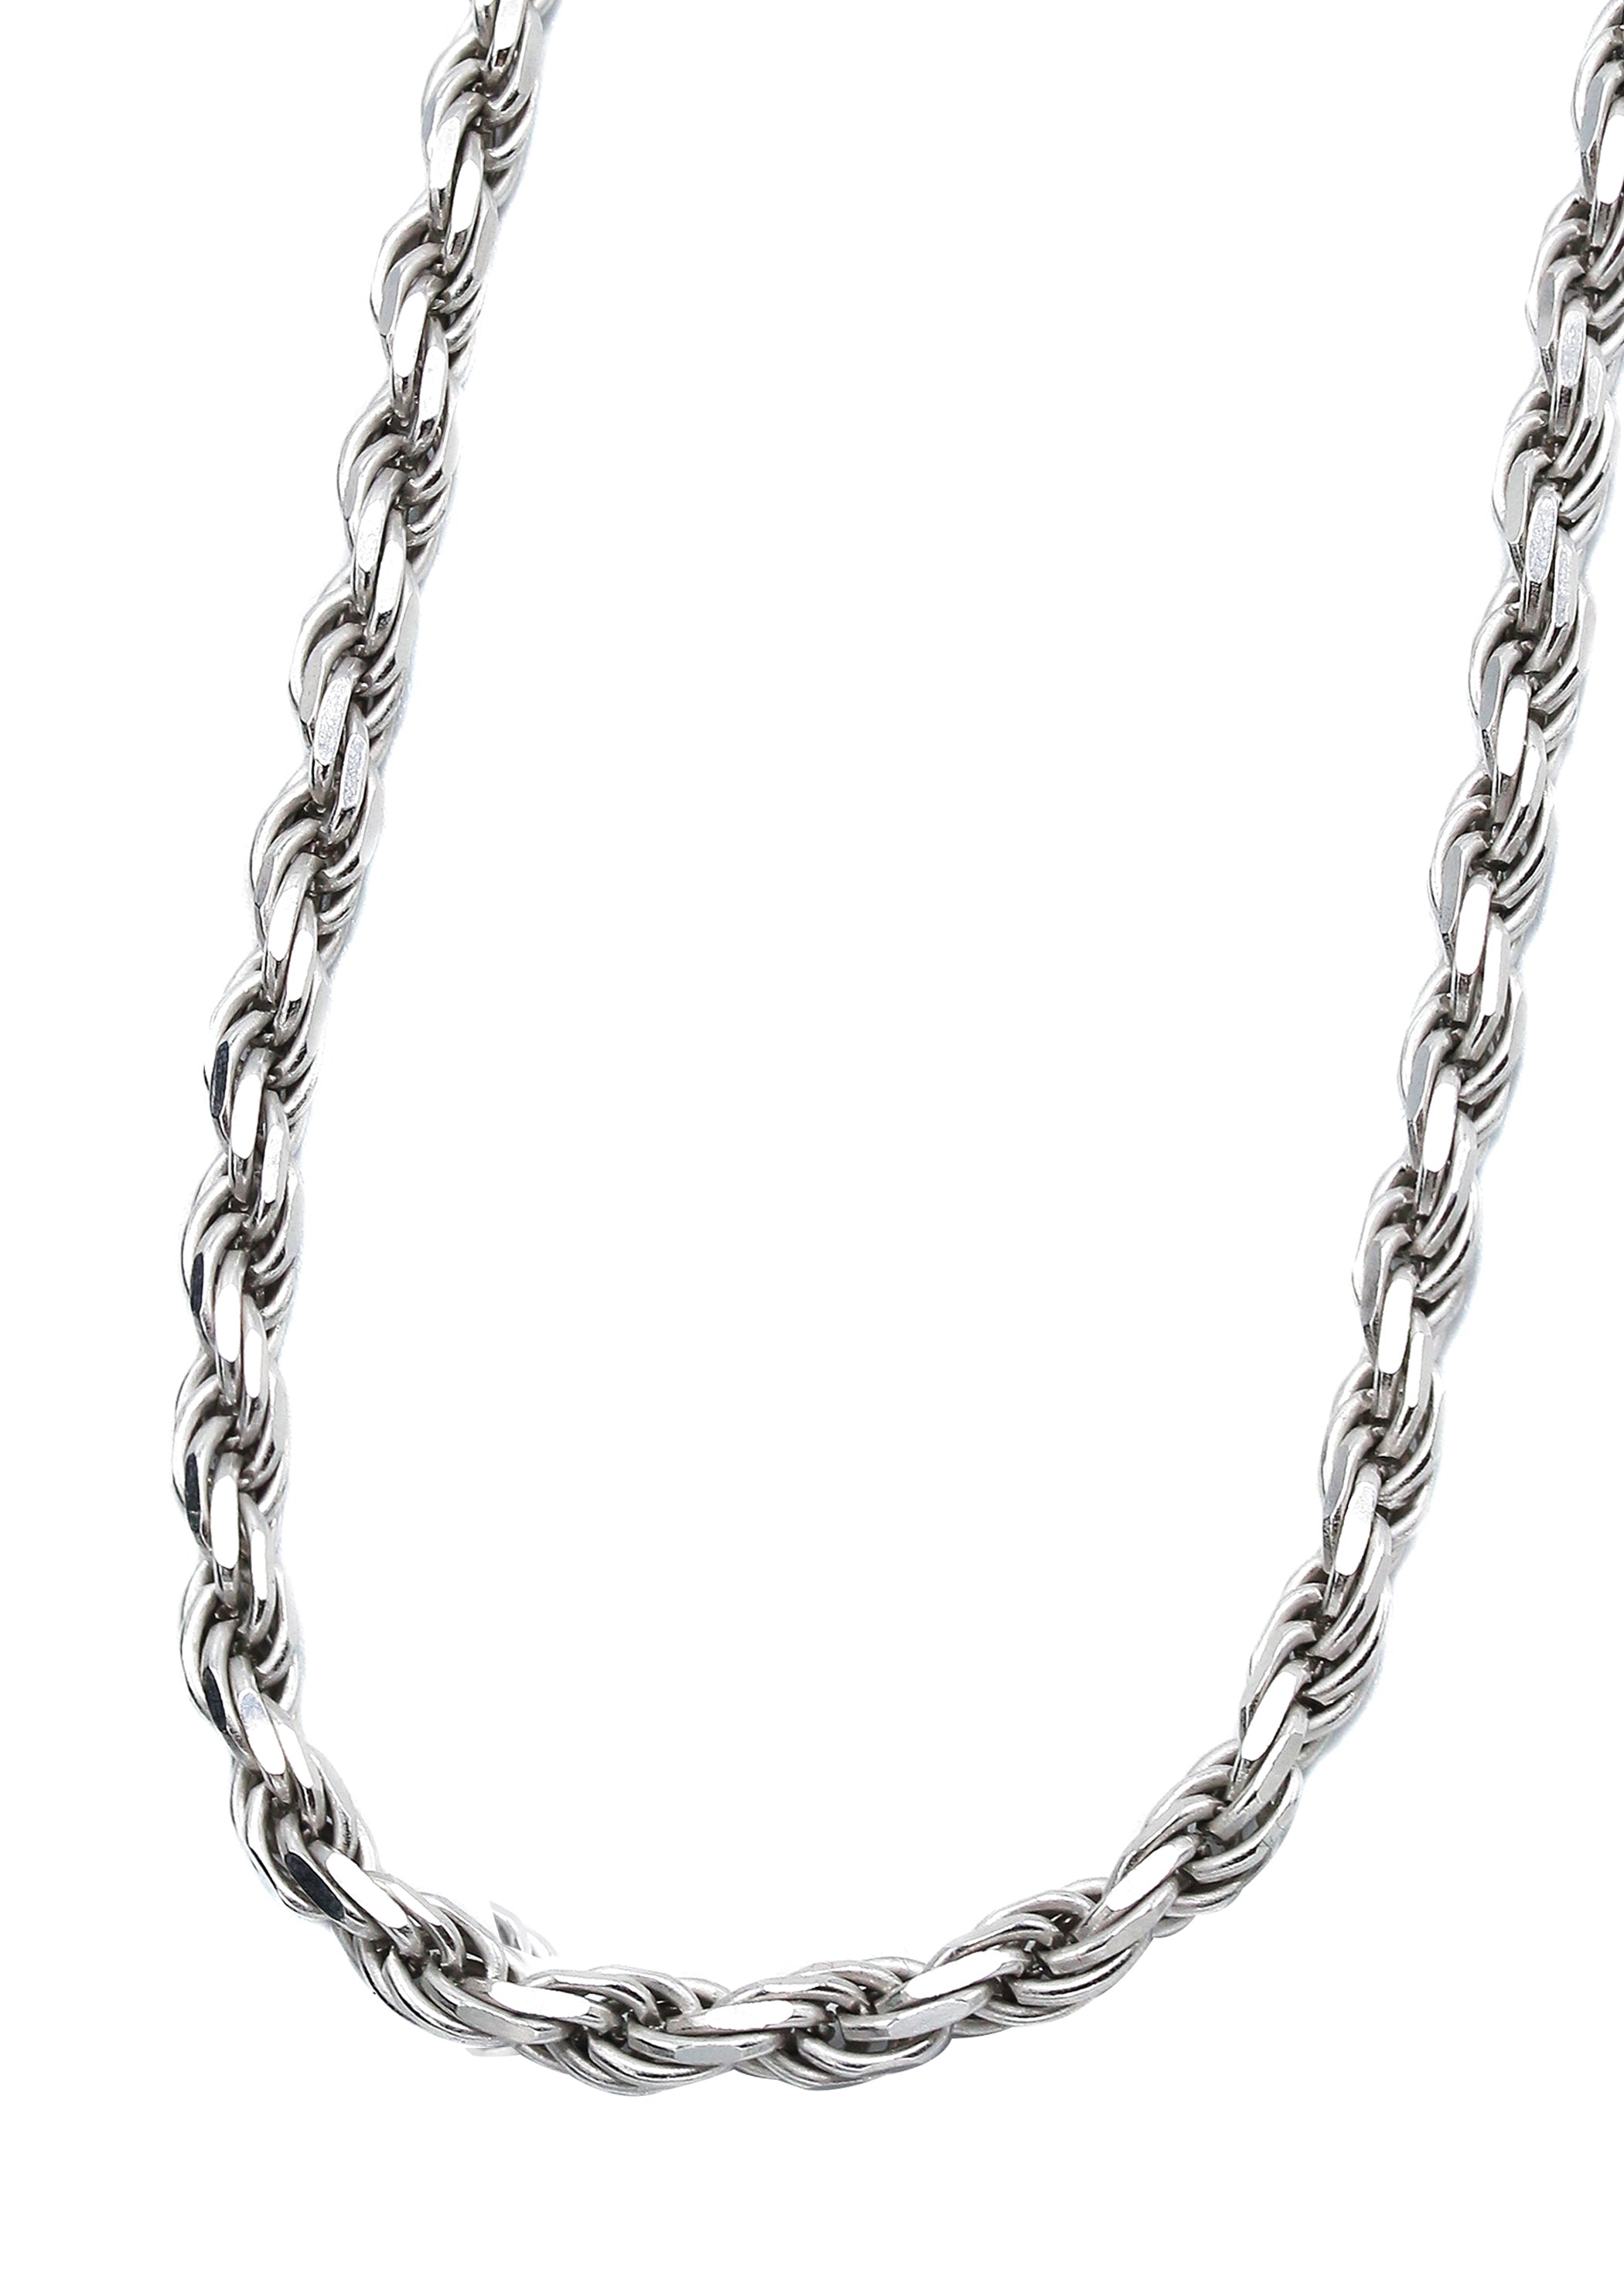 Silver Chain - Mens White Chain / Rope Chain / 3.5 MM